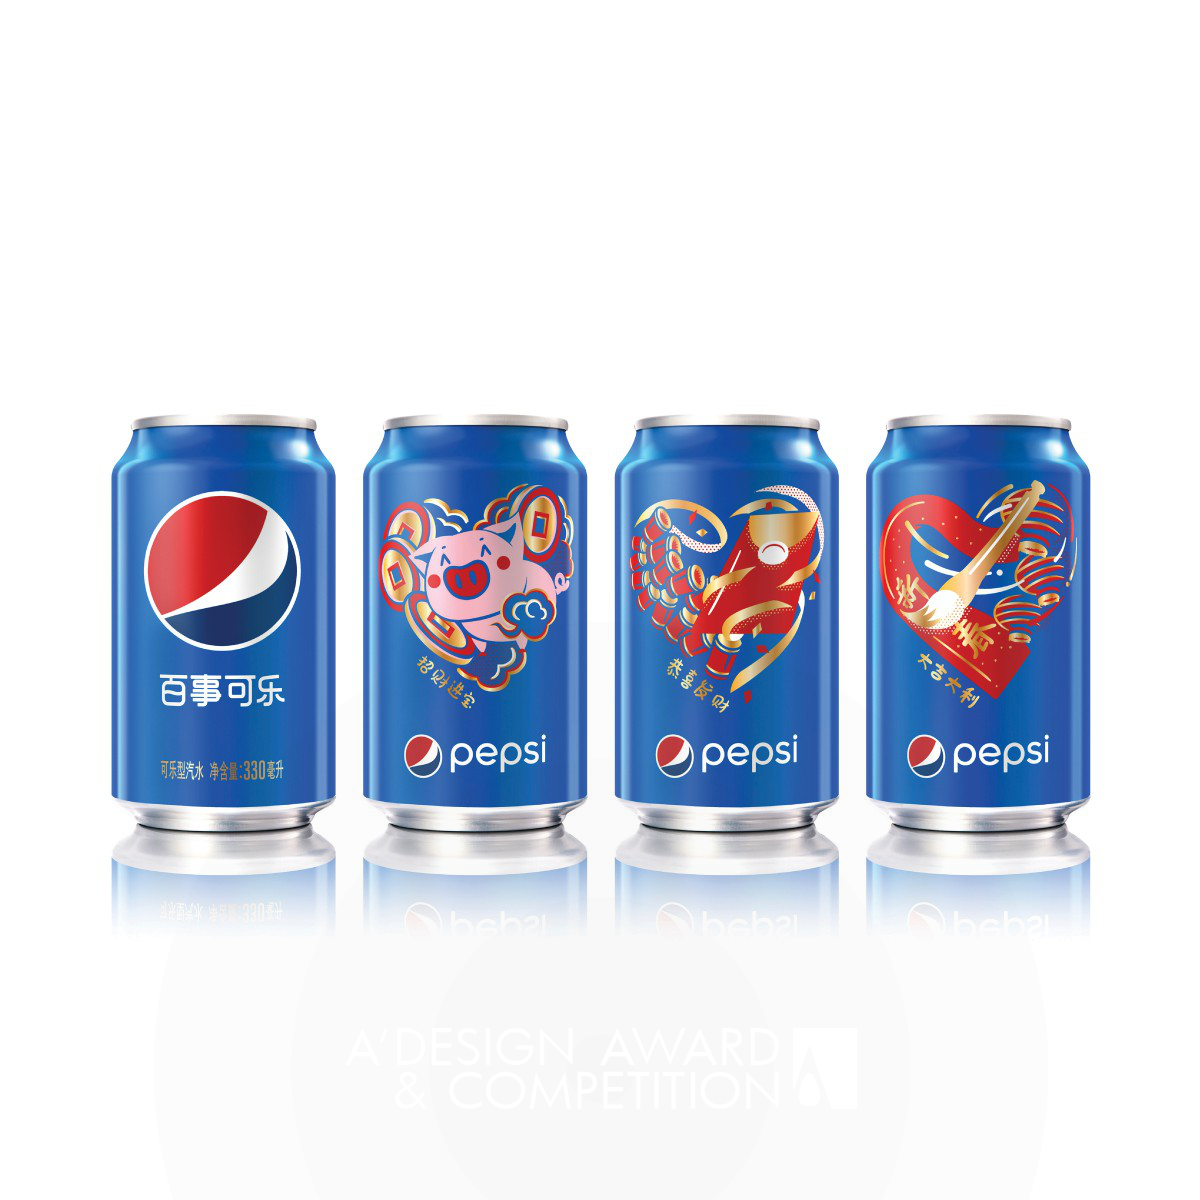 Pepsi Year of the Pig Ltd Ed Beverage Packaging by PepsiCo Design & Innovation